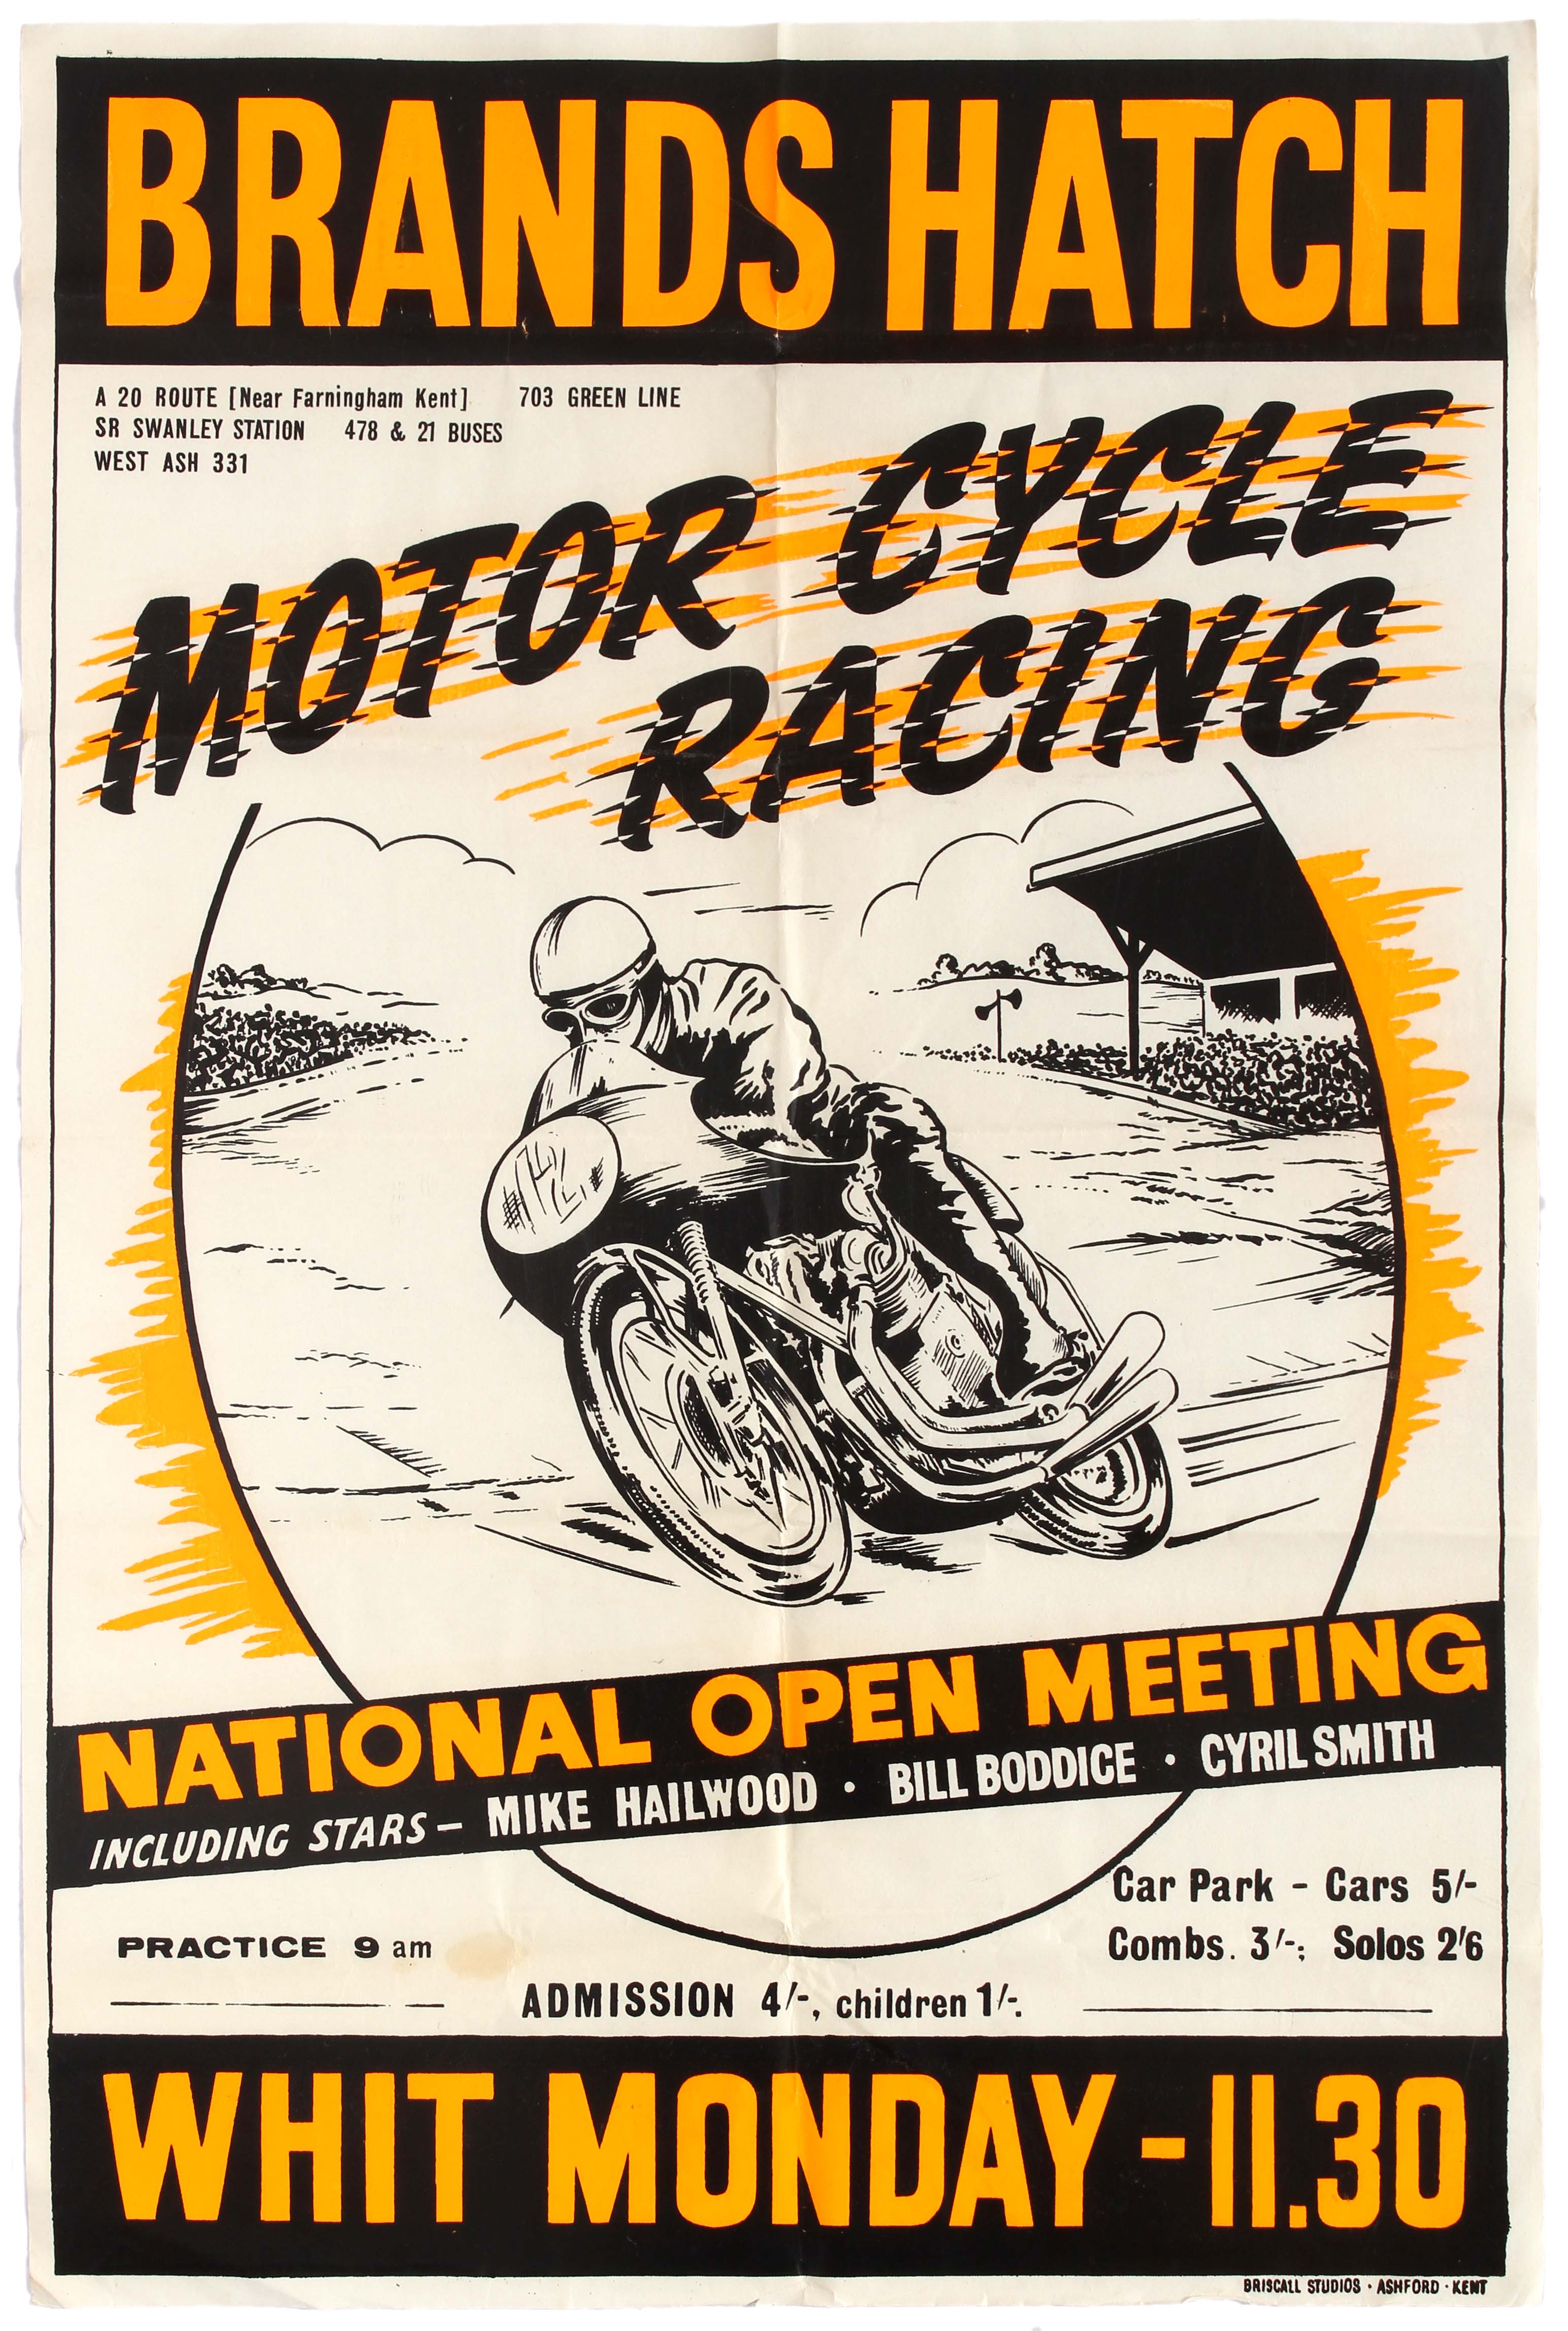 Sport Poster Brands Hatch Motorcycle Racing National Open Meeting